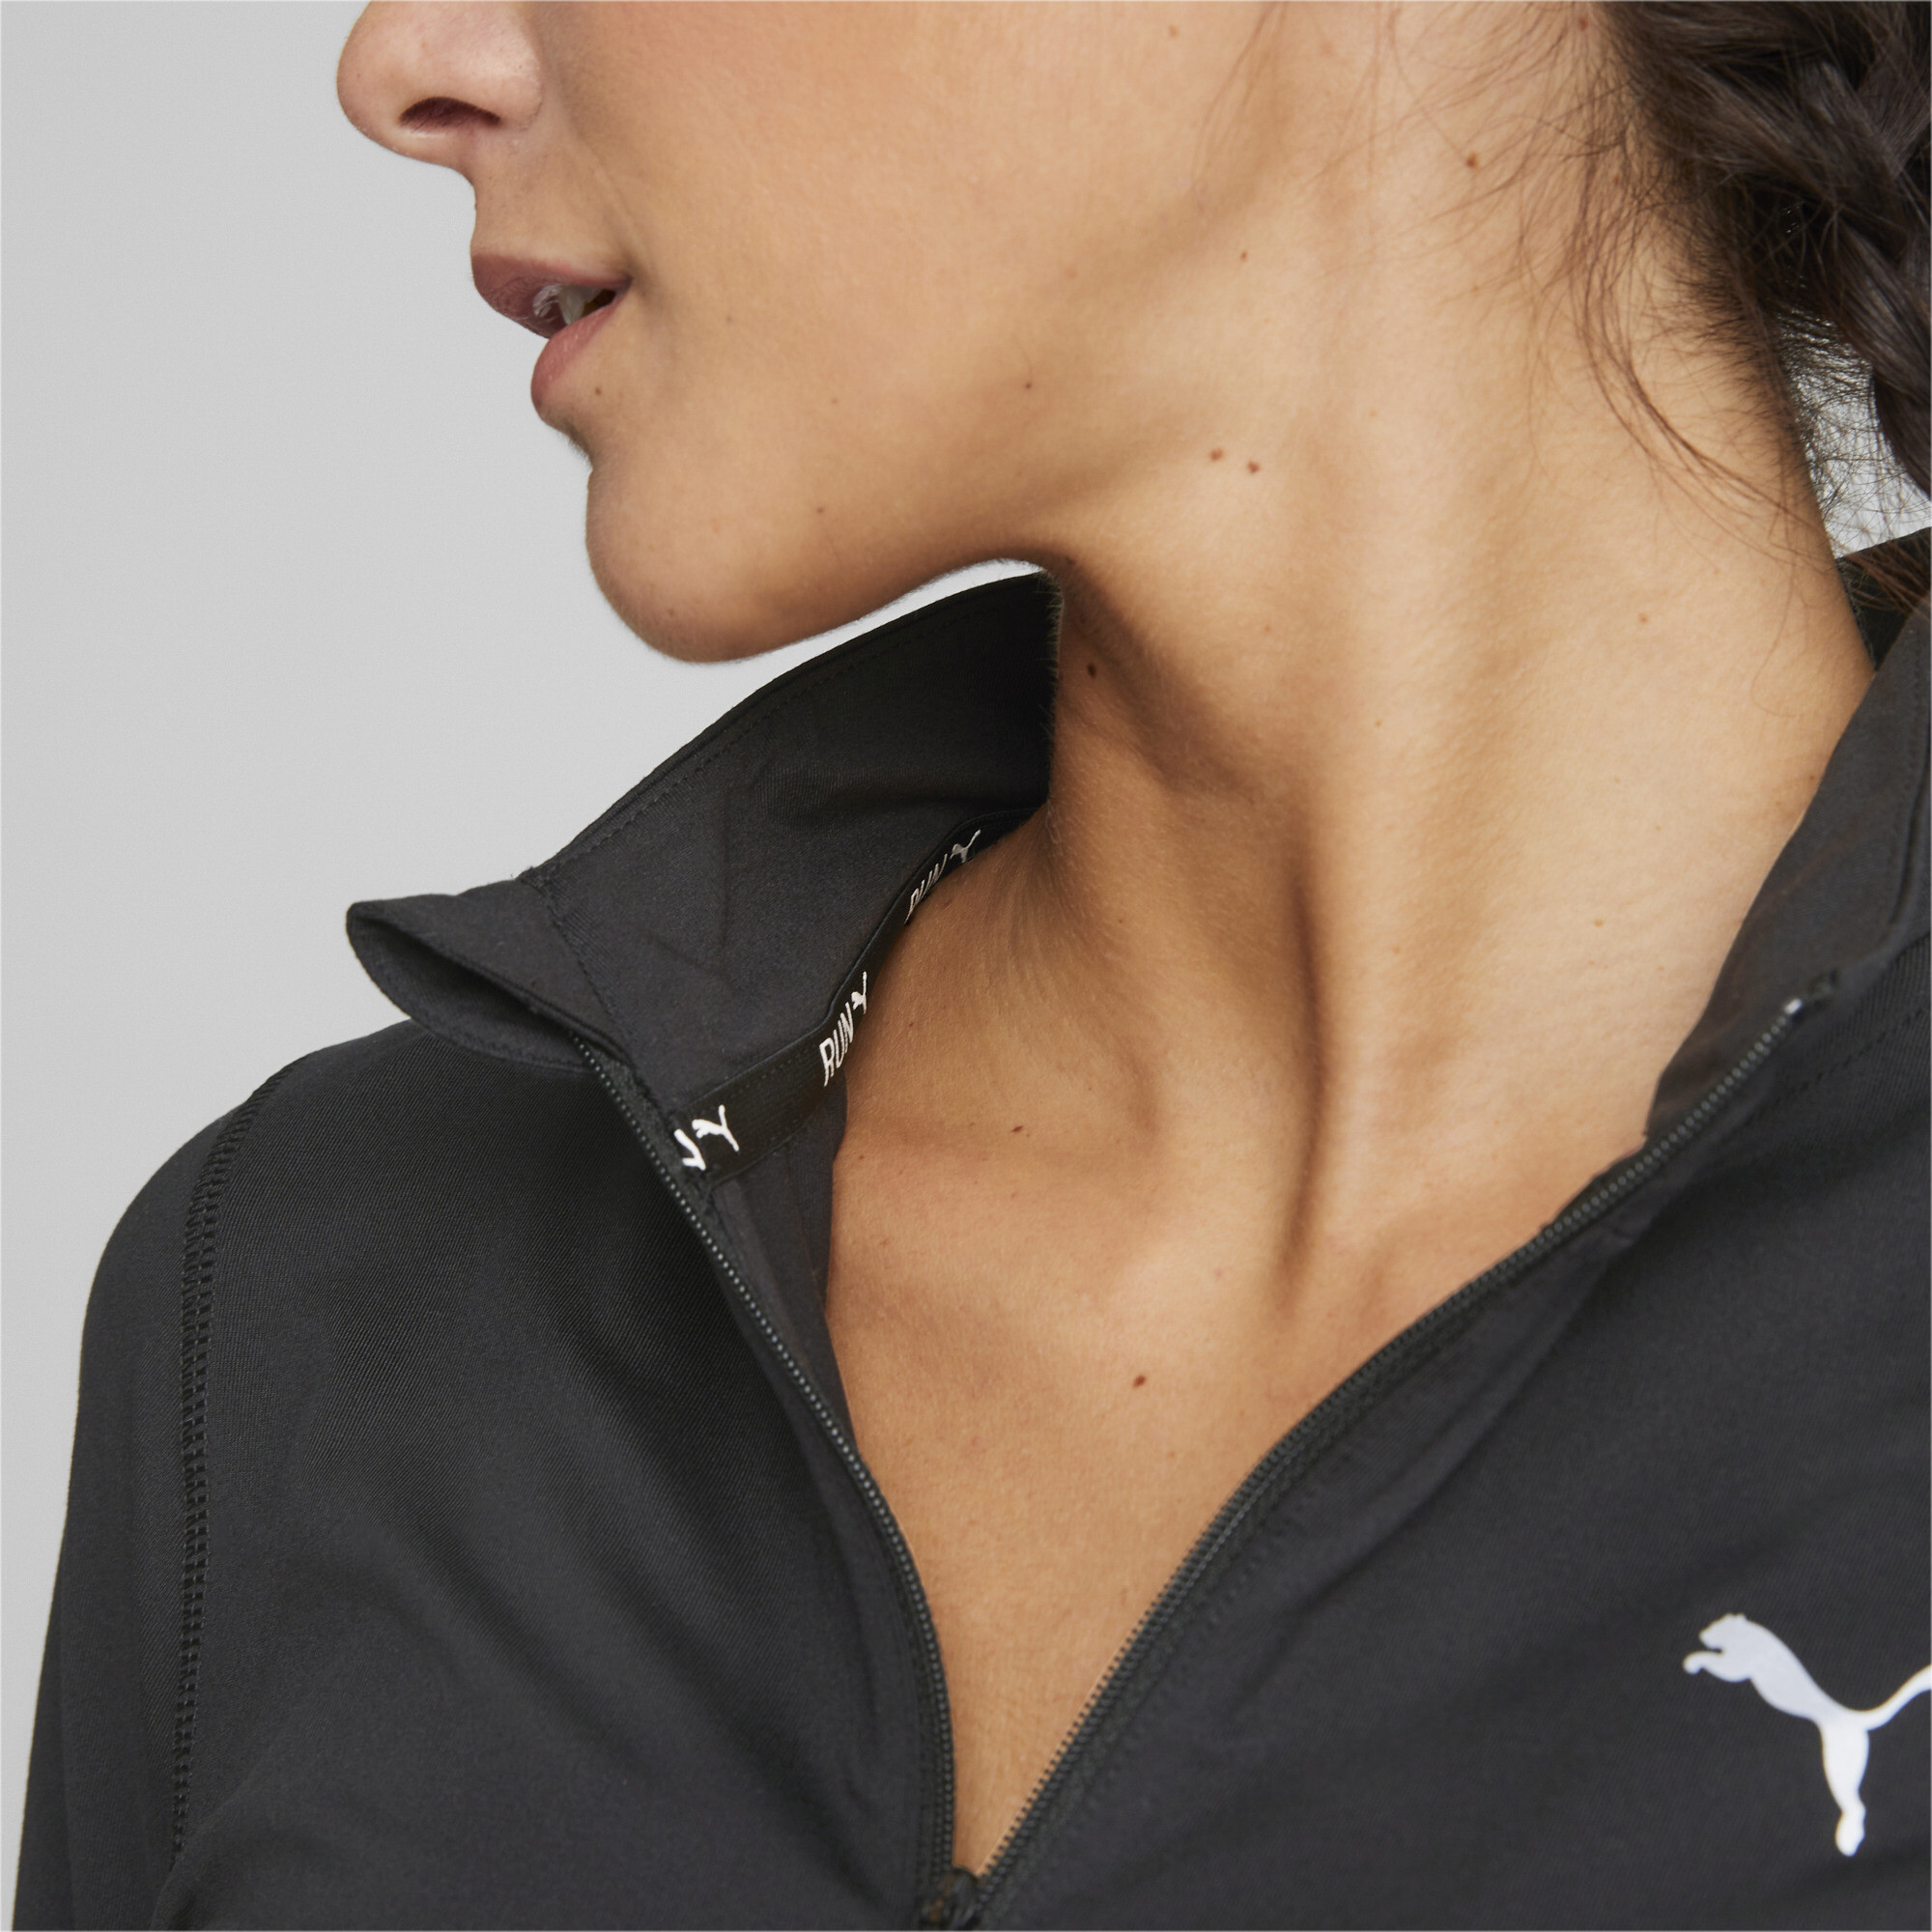 Women's Puma Run Favourite Quarter-Zip Running Top, Black, Size L, Clothing